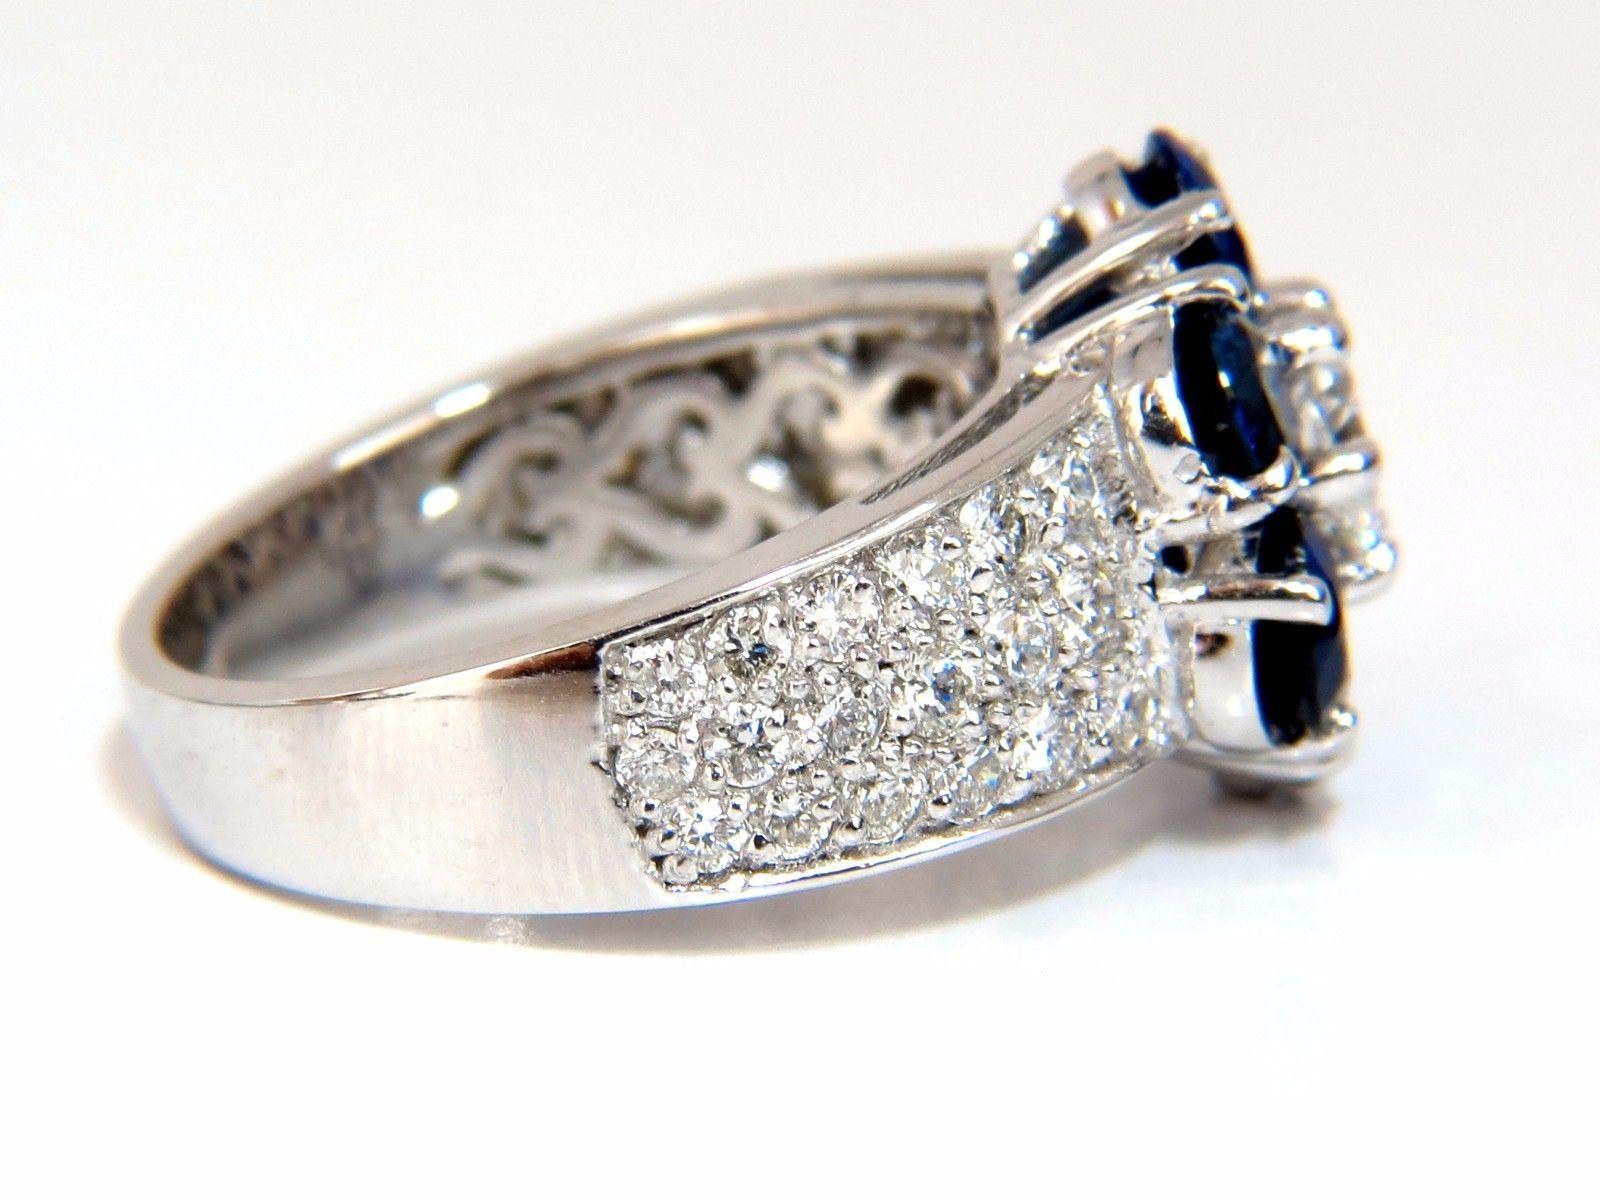 Classic Diamond & Sapphires Cluster ring / Floretta

.46ct. Natural Round Cut diamond (center)

Full Cut Brilliant

G-color Vs-2 Clarity

5.1mm diameter



Side Round Natural Blue Sapphires: 2.50ct. 

Vibrant Royal Blue & transparent

Full cut and